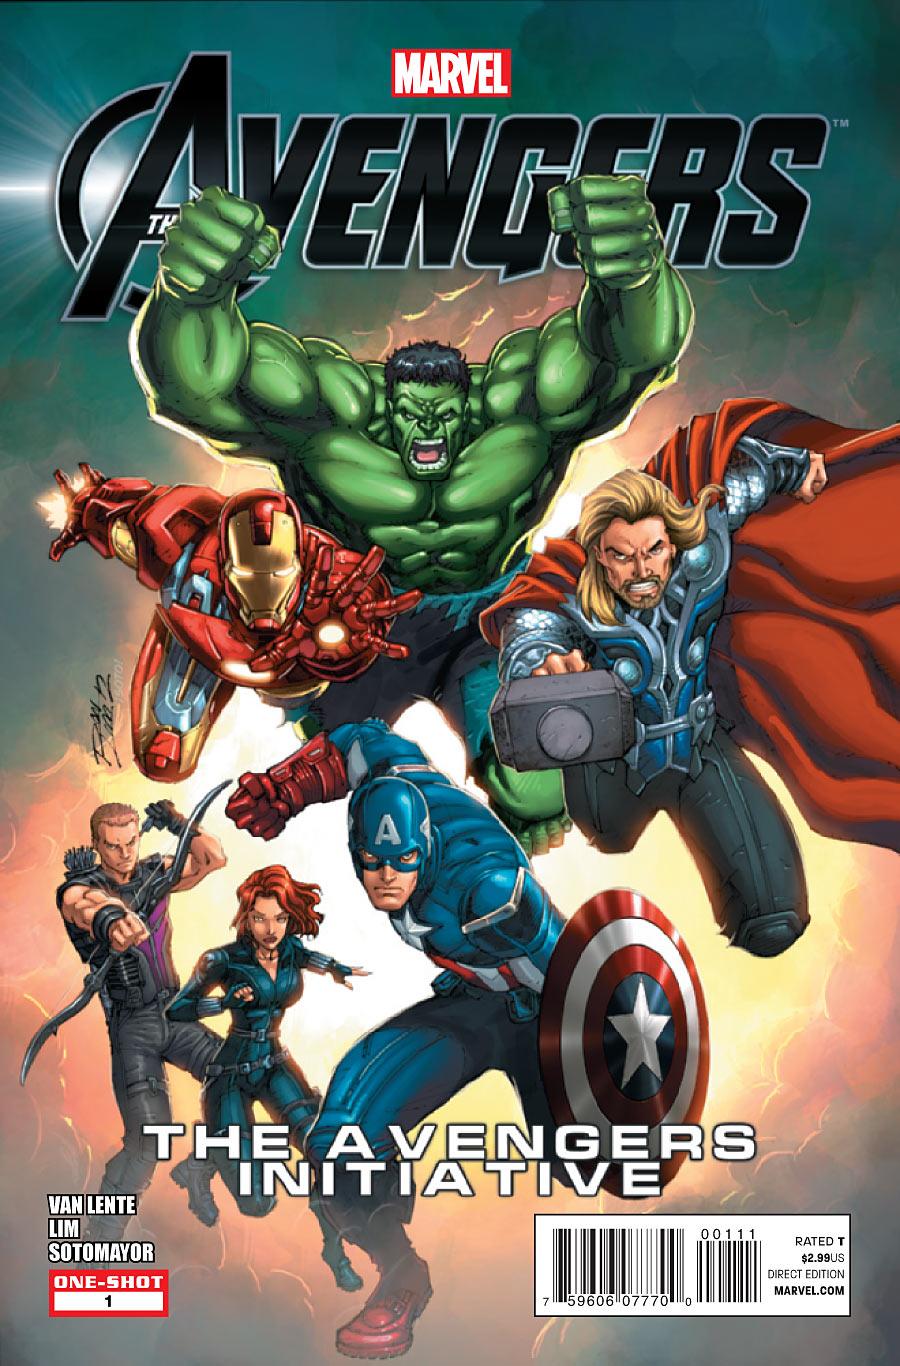 Marvel: The Avengers: The Avengers Initiative Vol. 1 #1